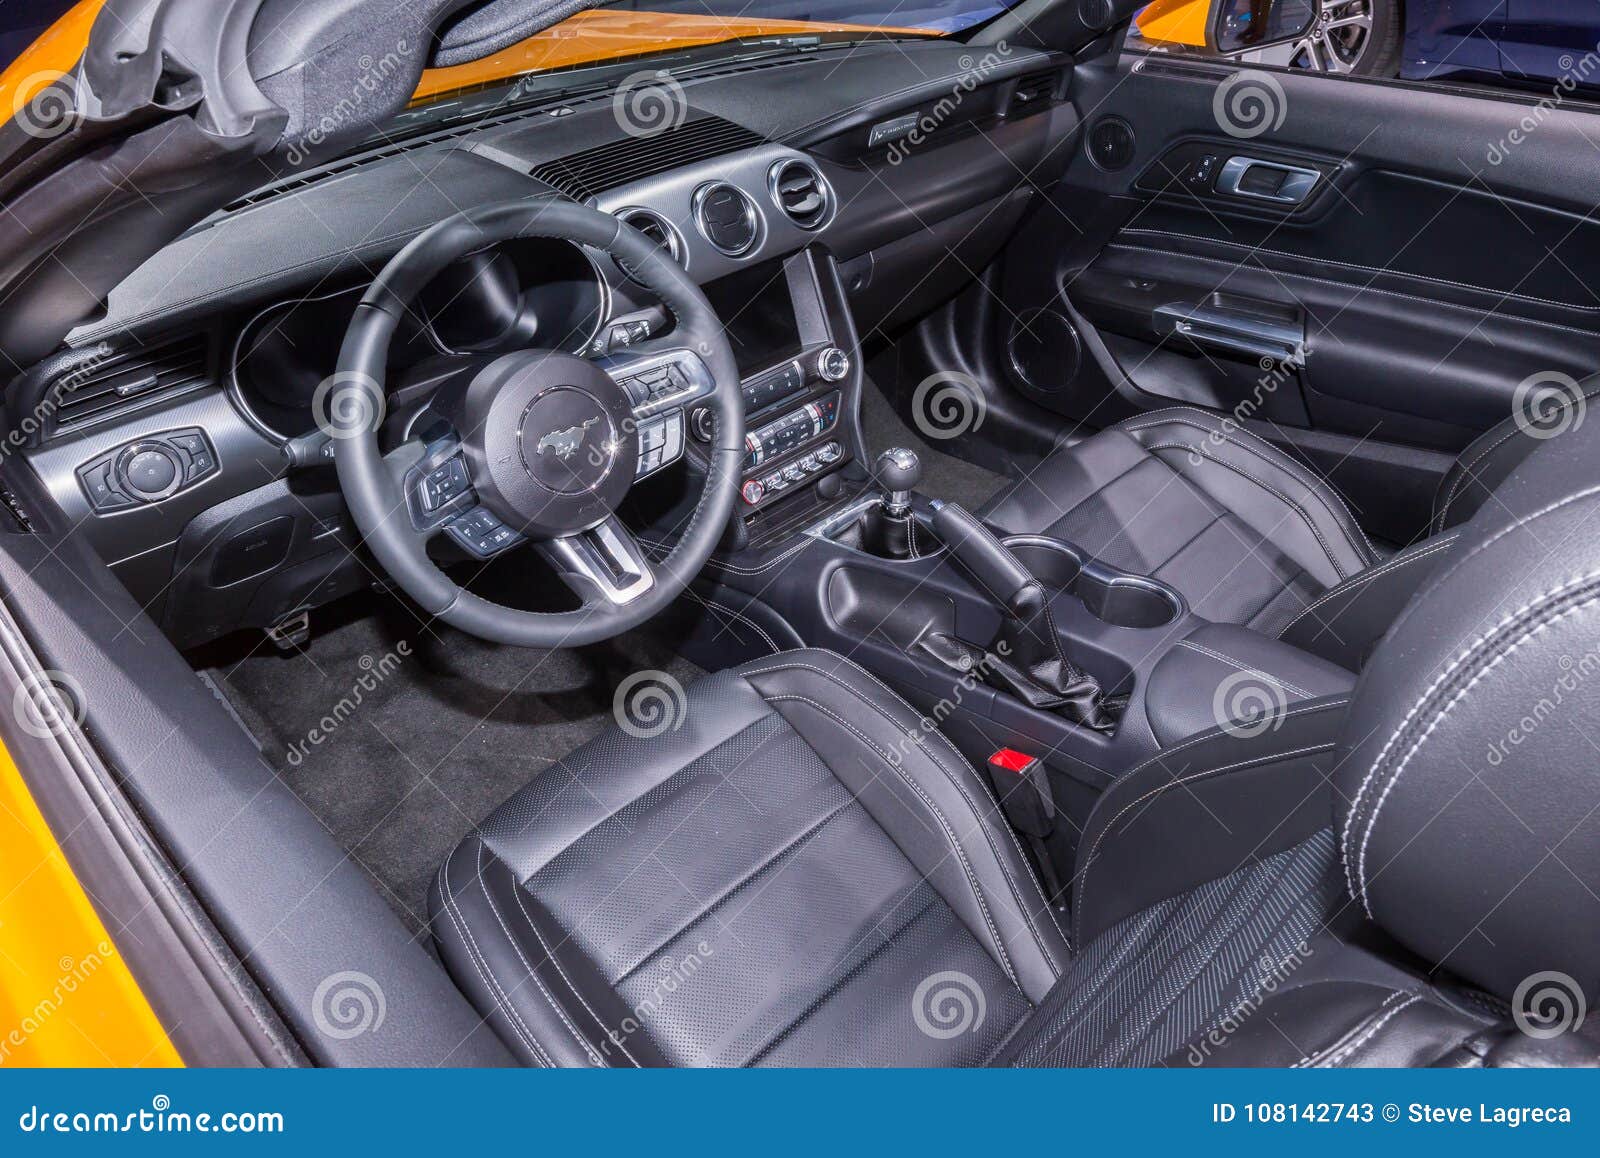 2018 Ford Mustang Interior Naias Redaktionelles Stockfoto